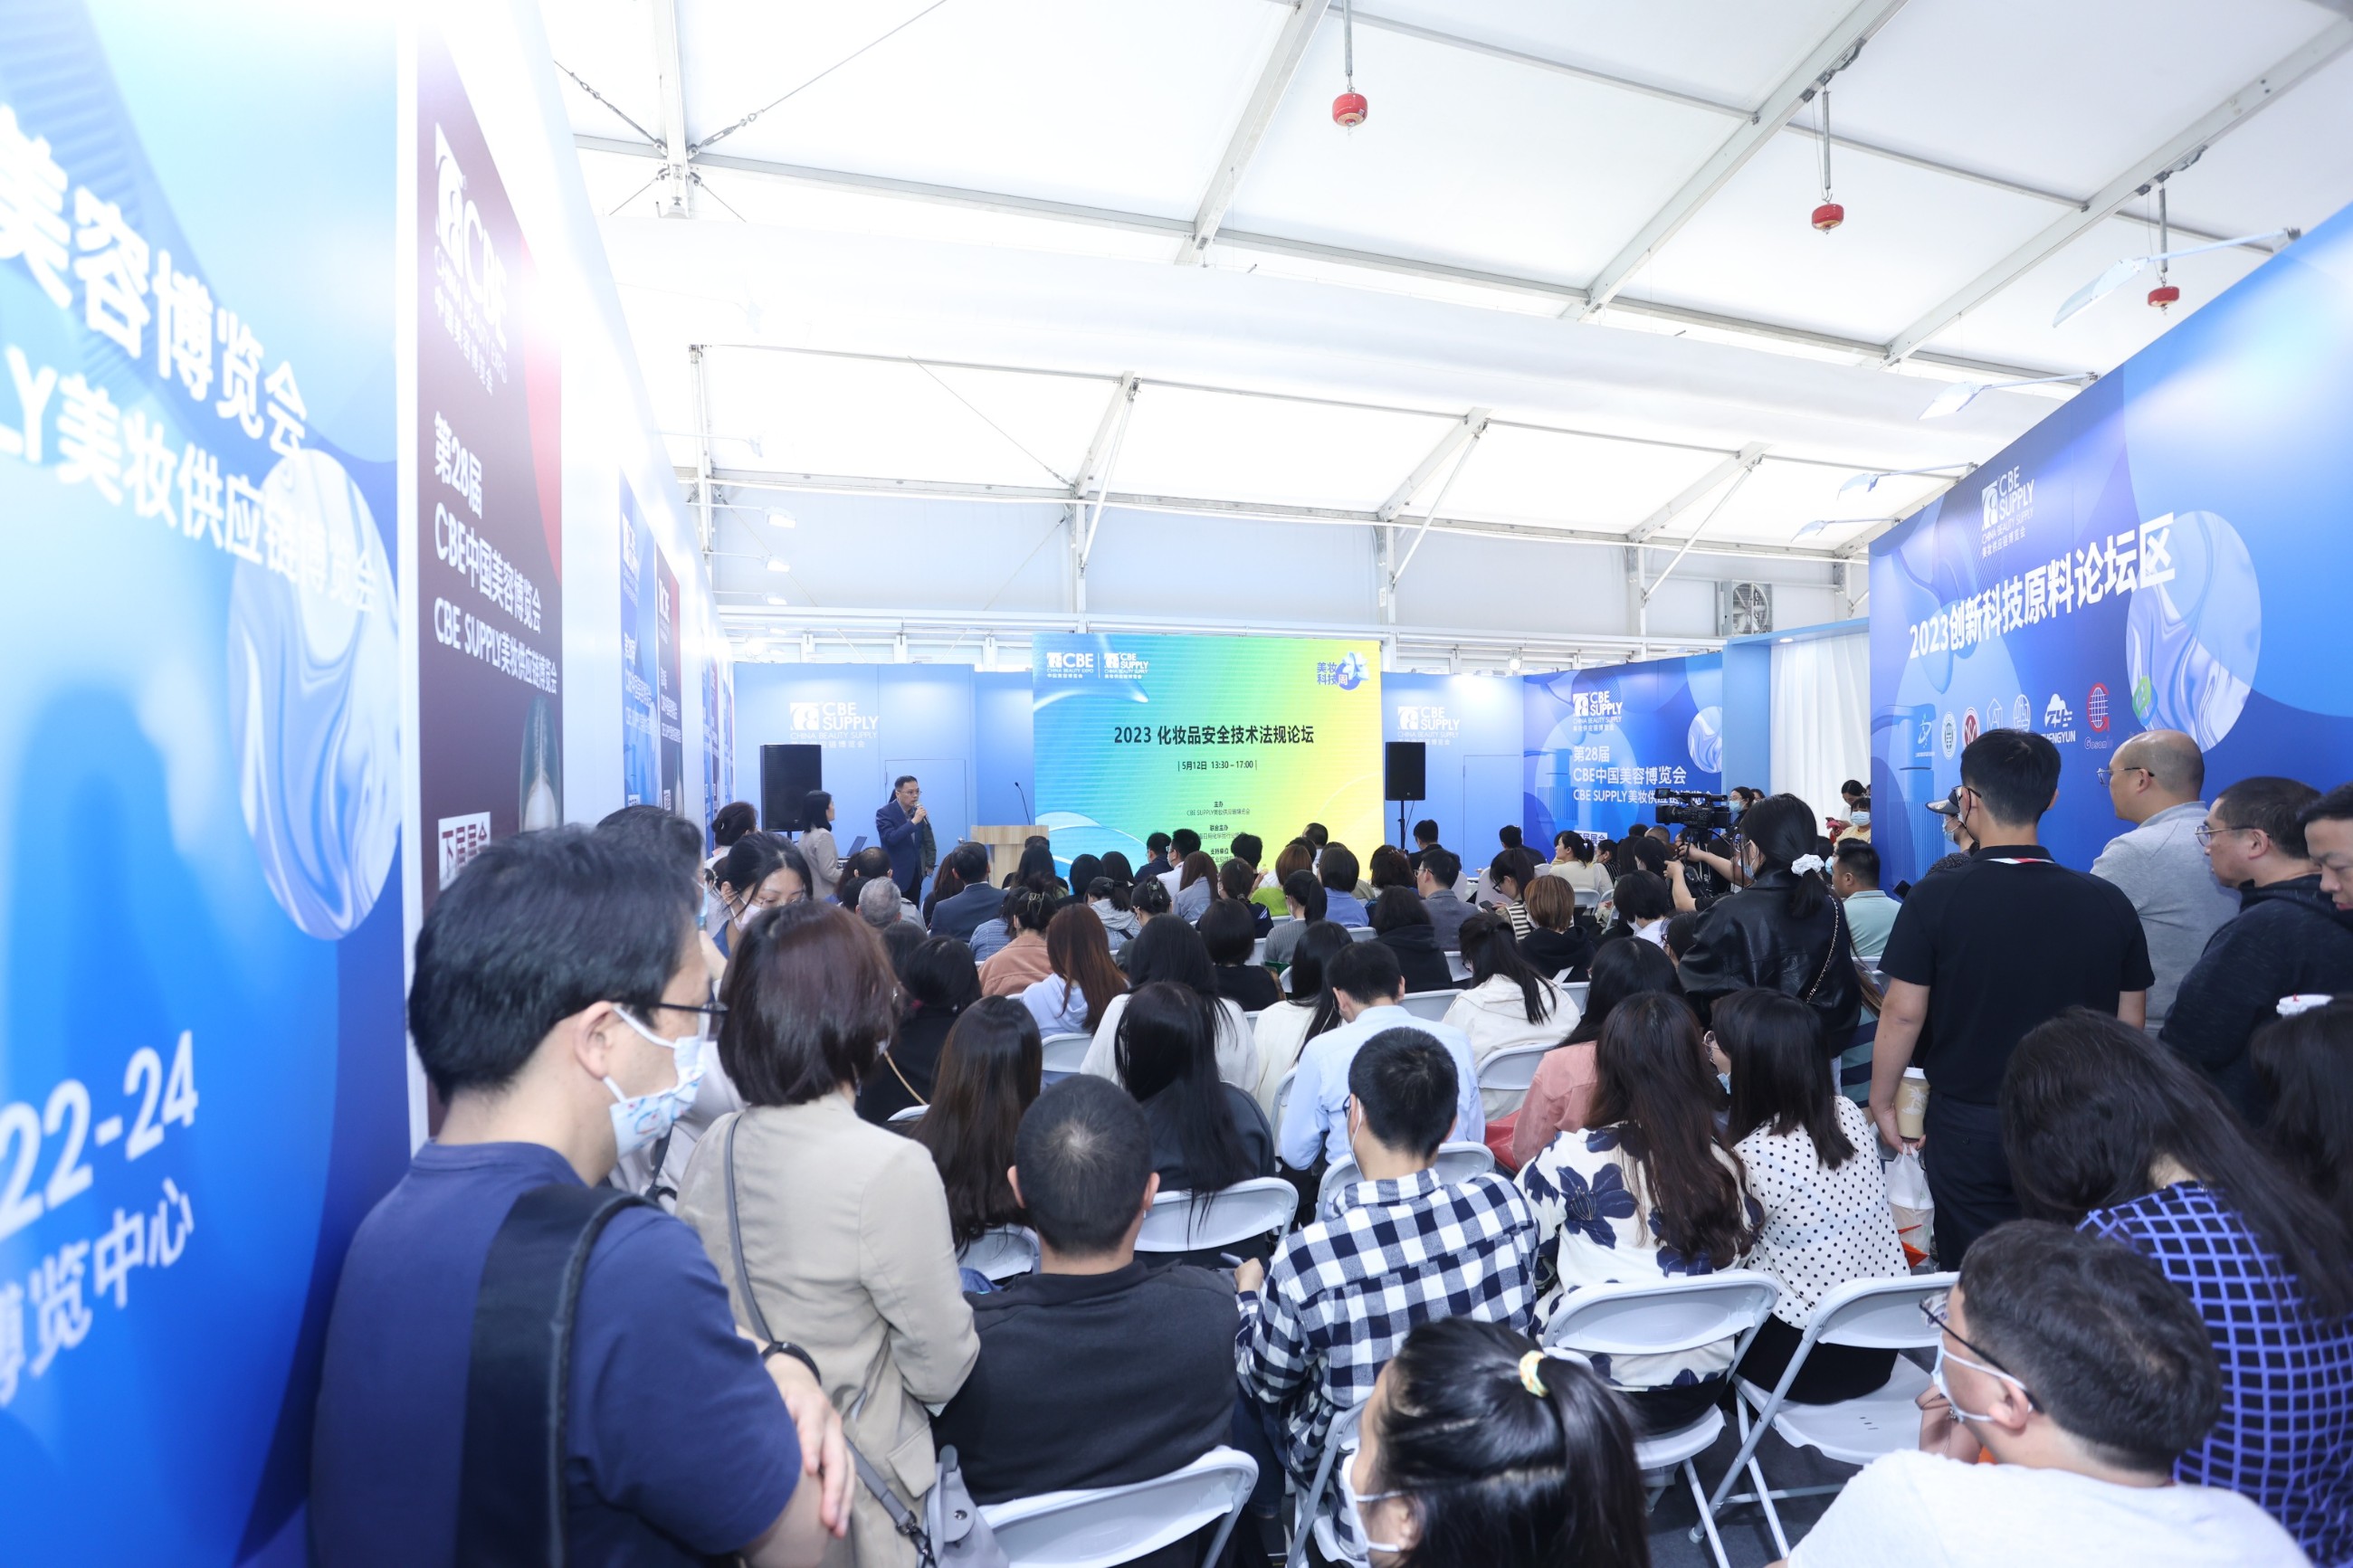 2025CBE SUPPLY上海国际美妆供应链展览会